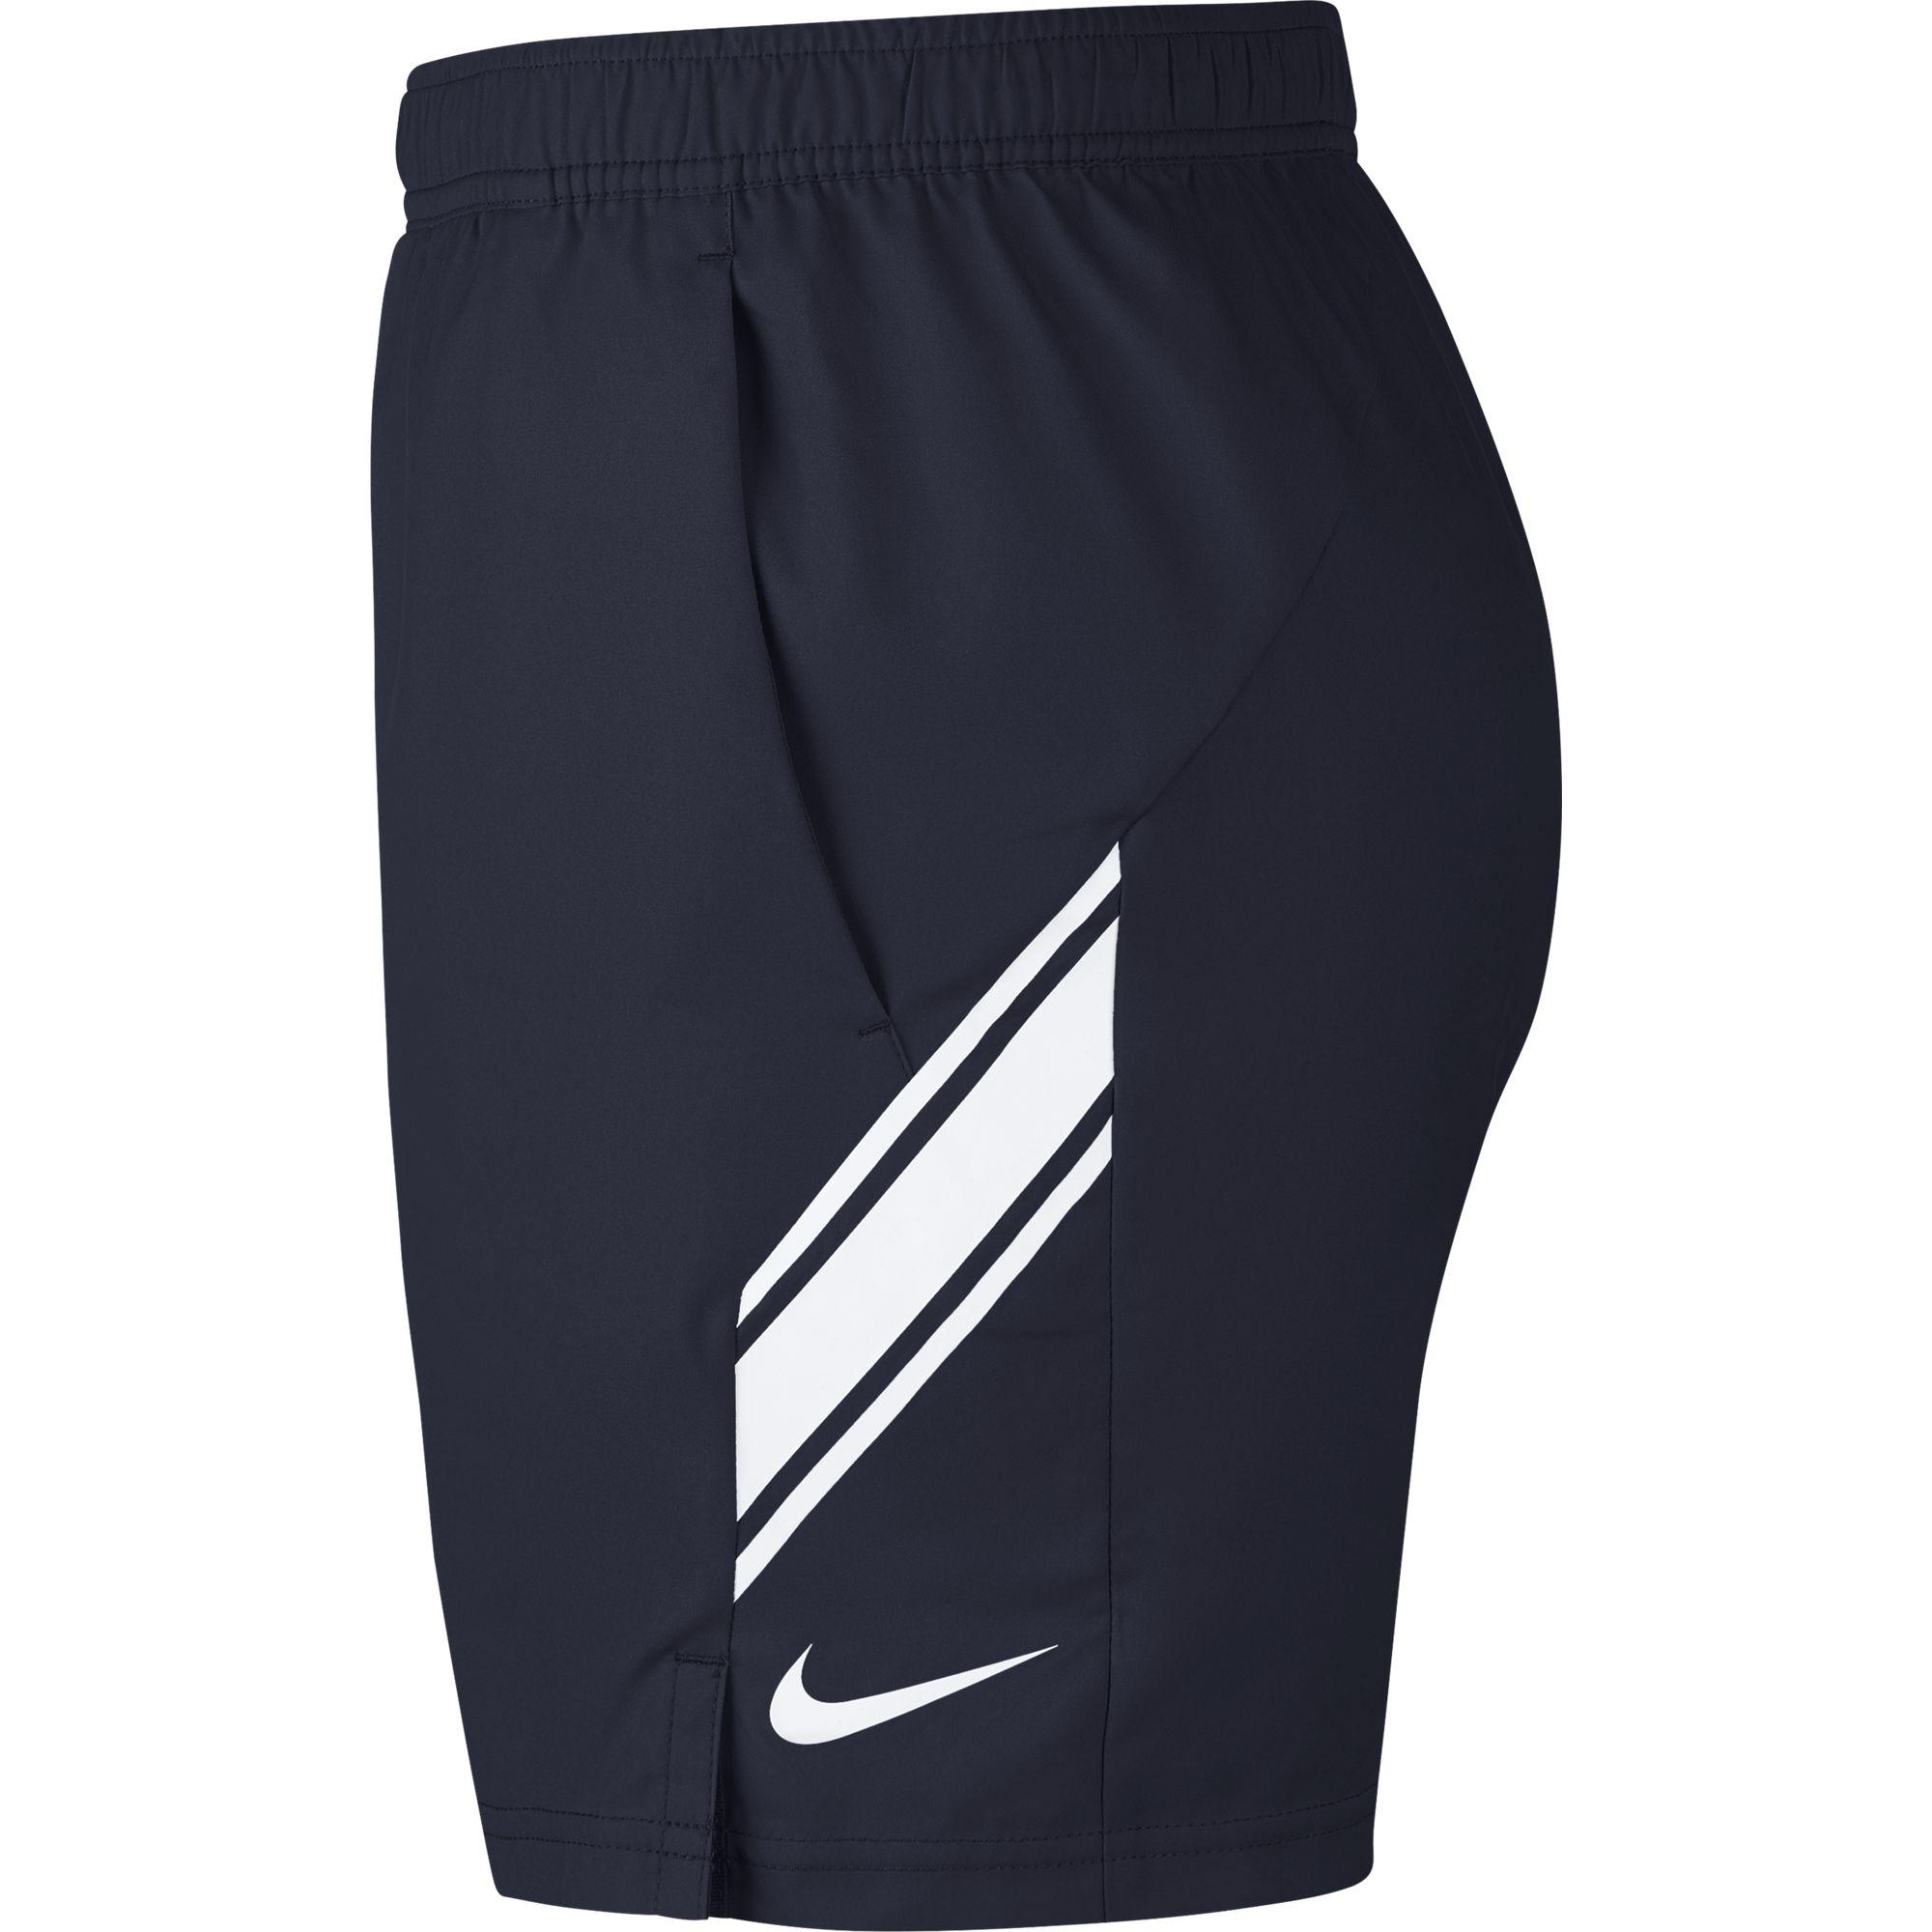 Nike Mens Dri-FIT 7 Inch Tennis Shorts - Obsidian/White - Tennisnuts.com